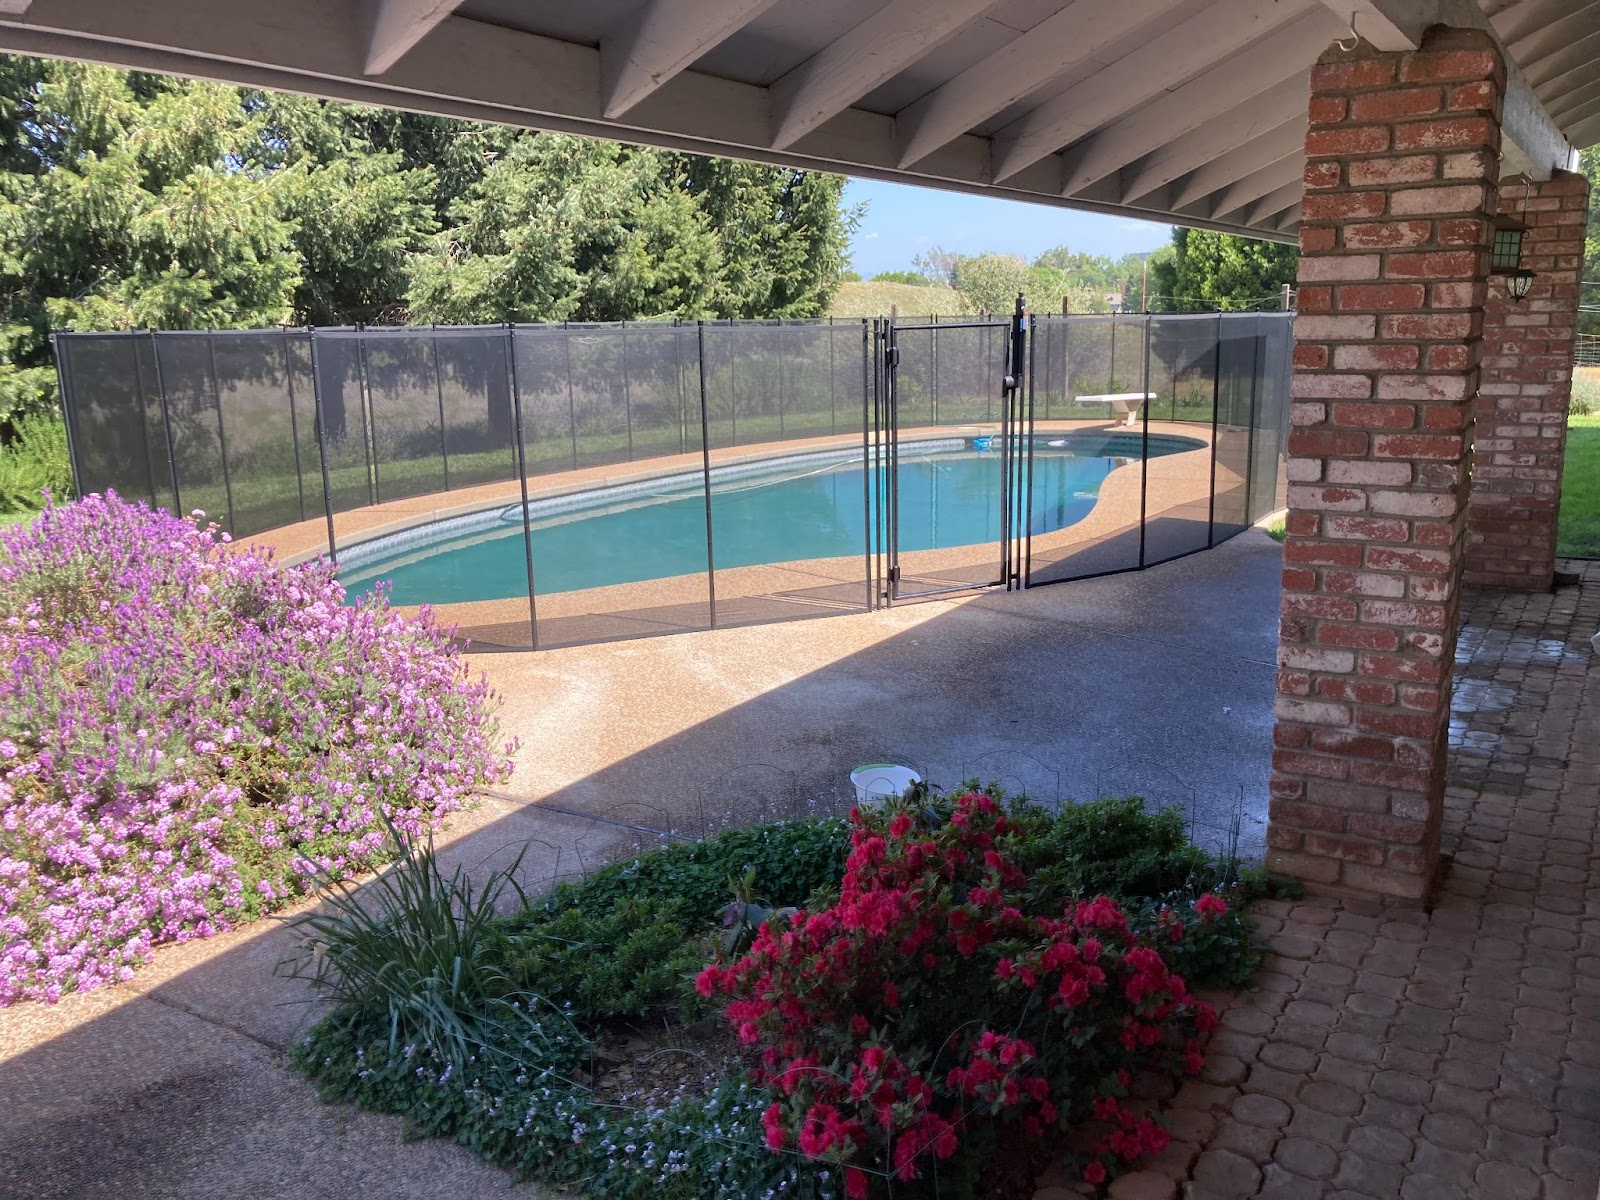 Black mesh pool fencing installed around a backyard pool